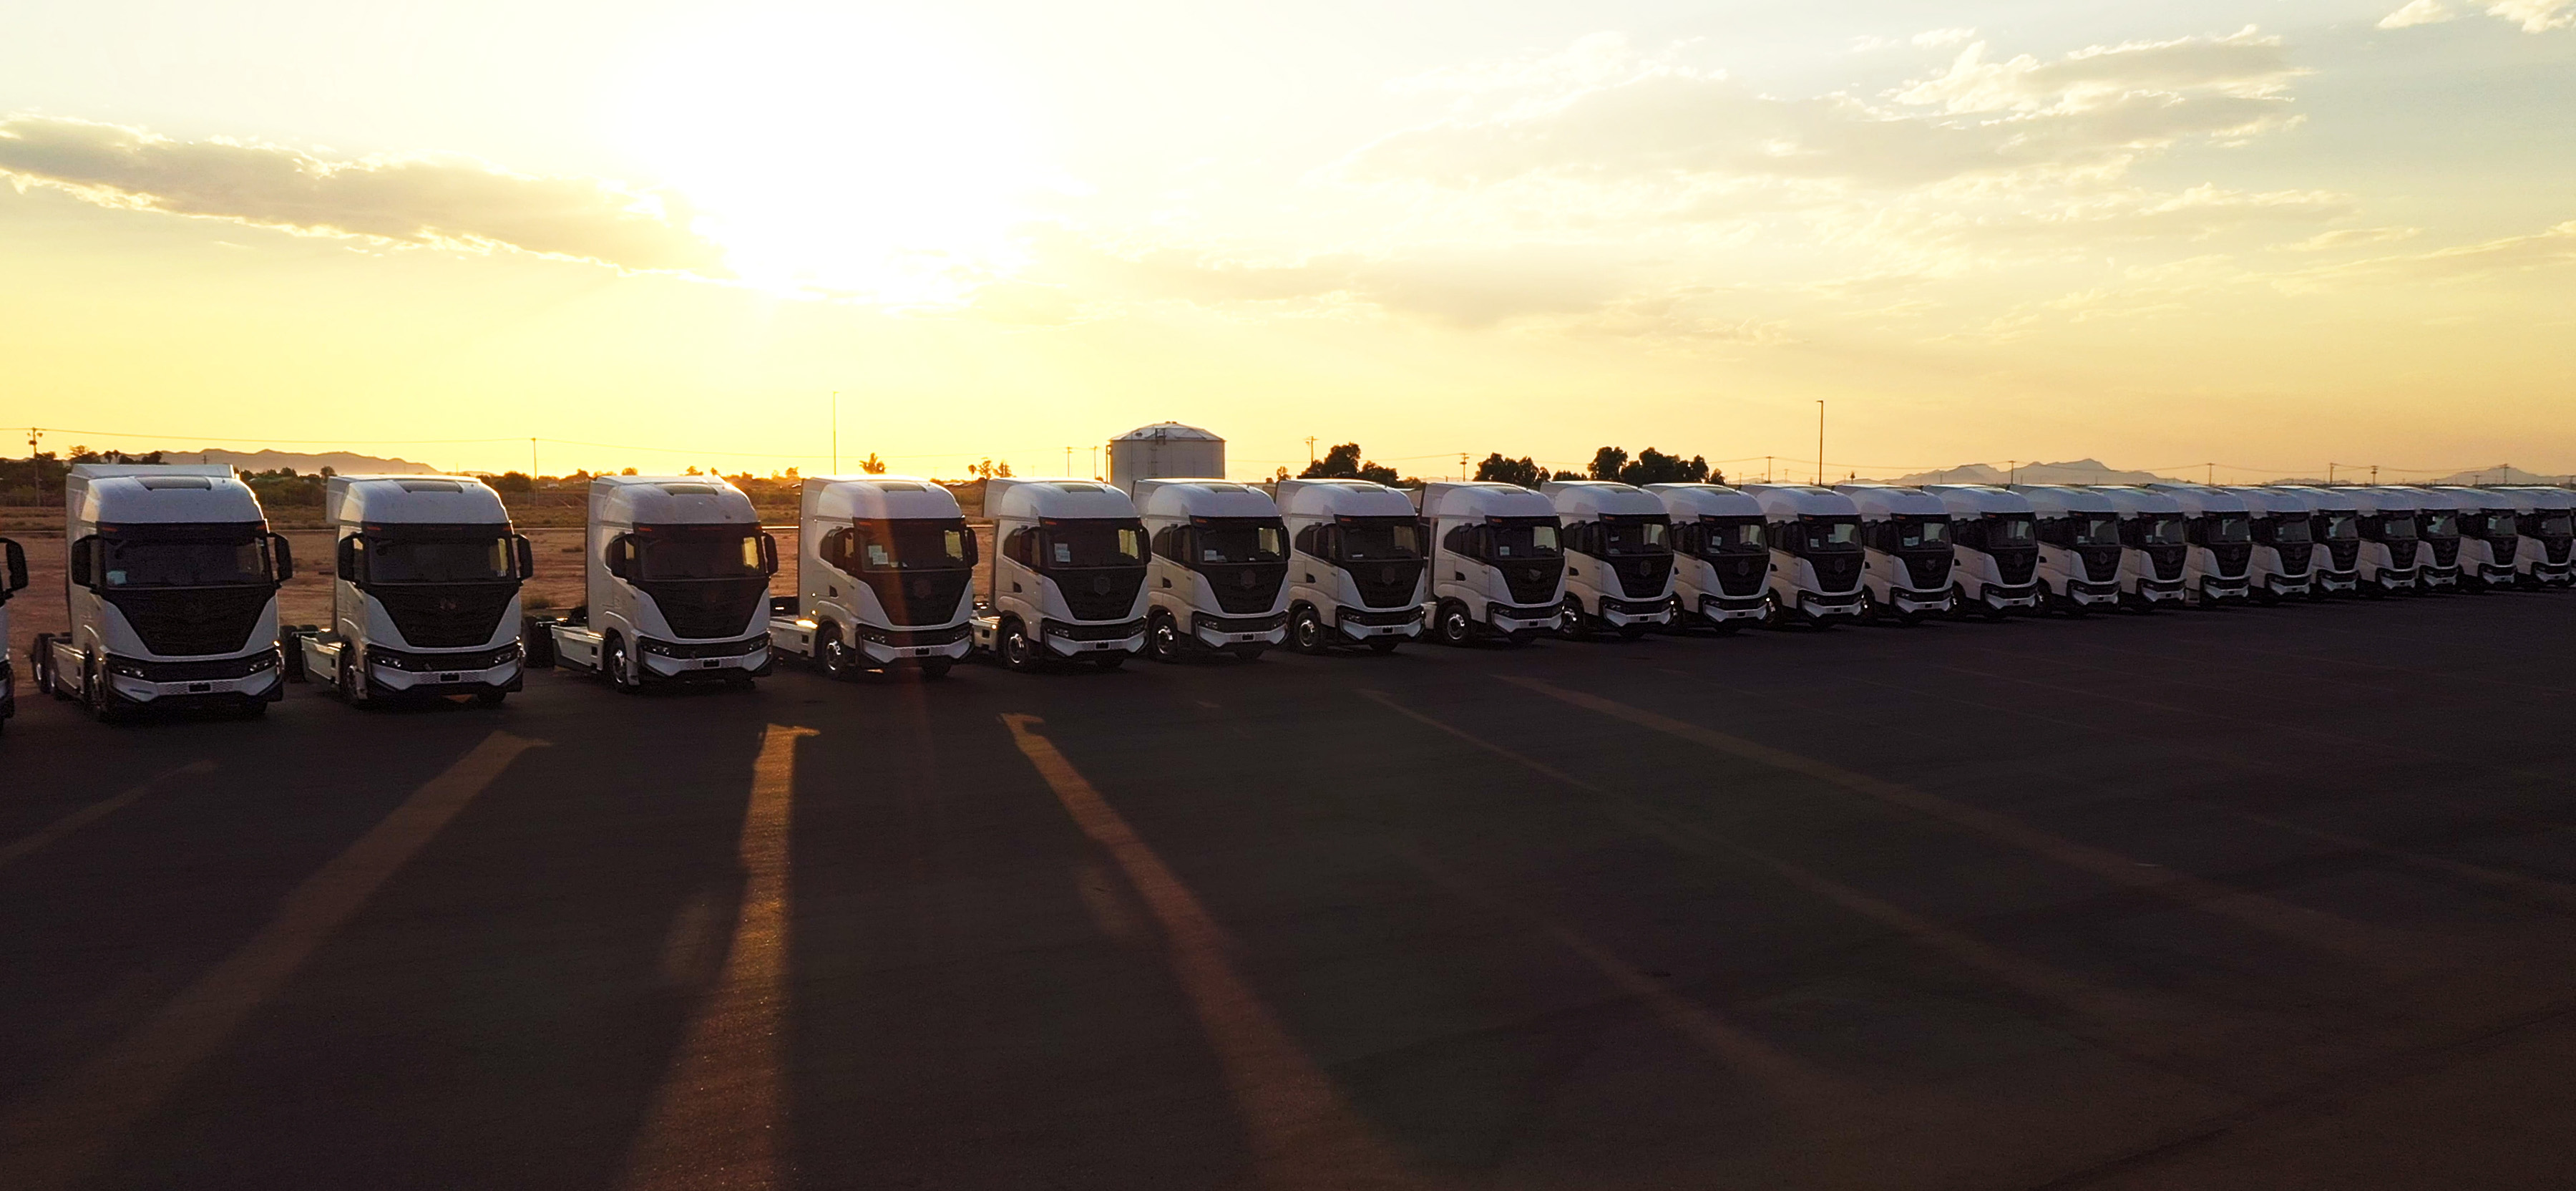 Row of Nikola Tre battery-electric trucks in shadow